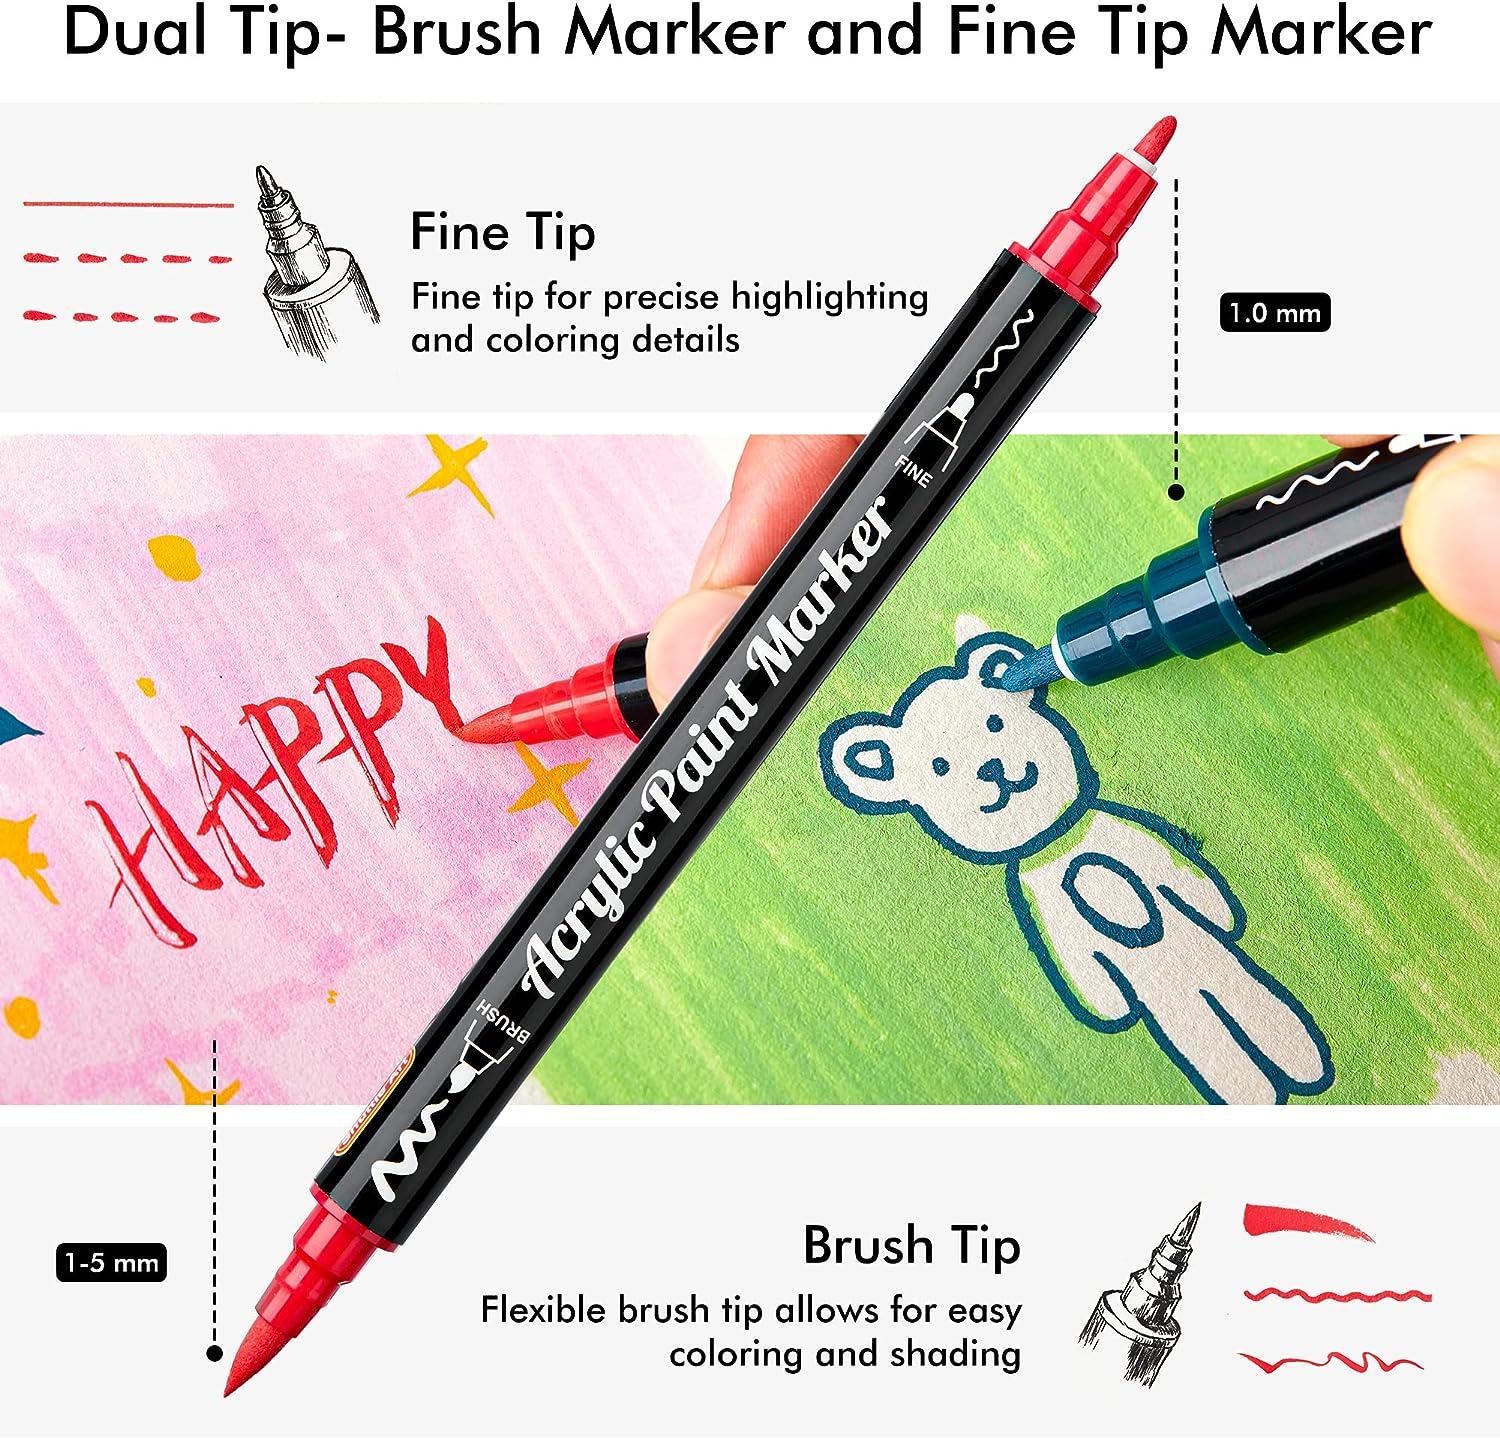  Colpart 12 Colors Dual Tip Acrylic Paint Pens